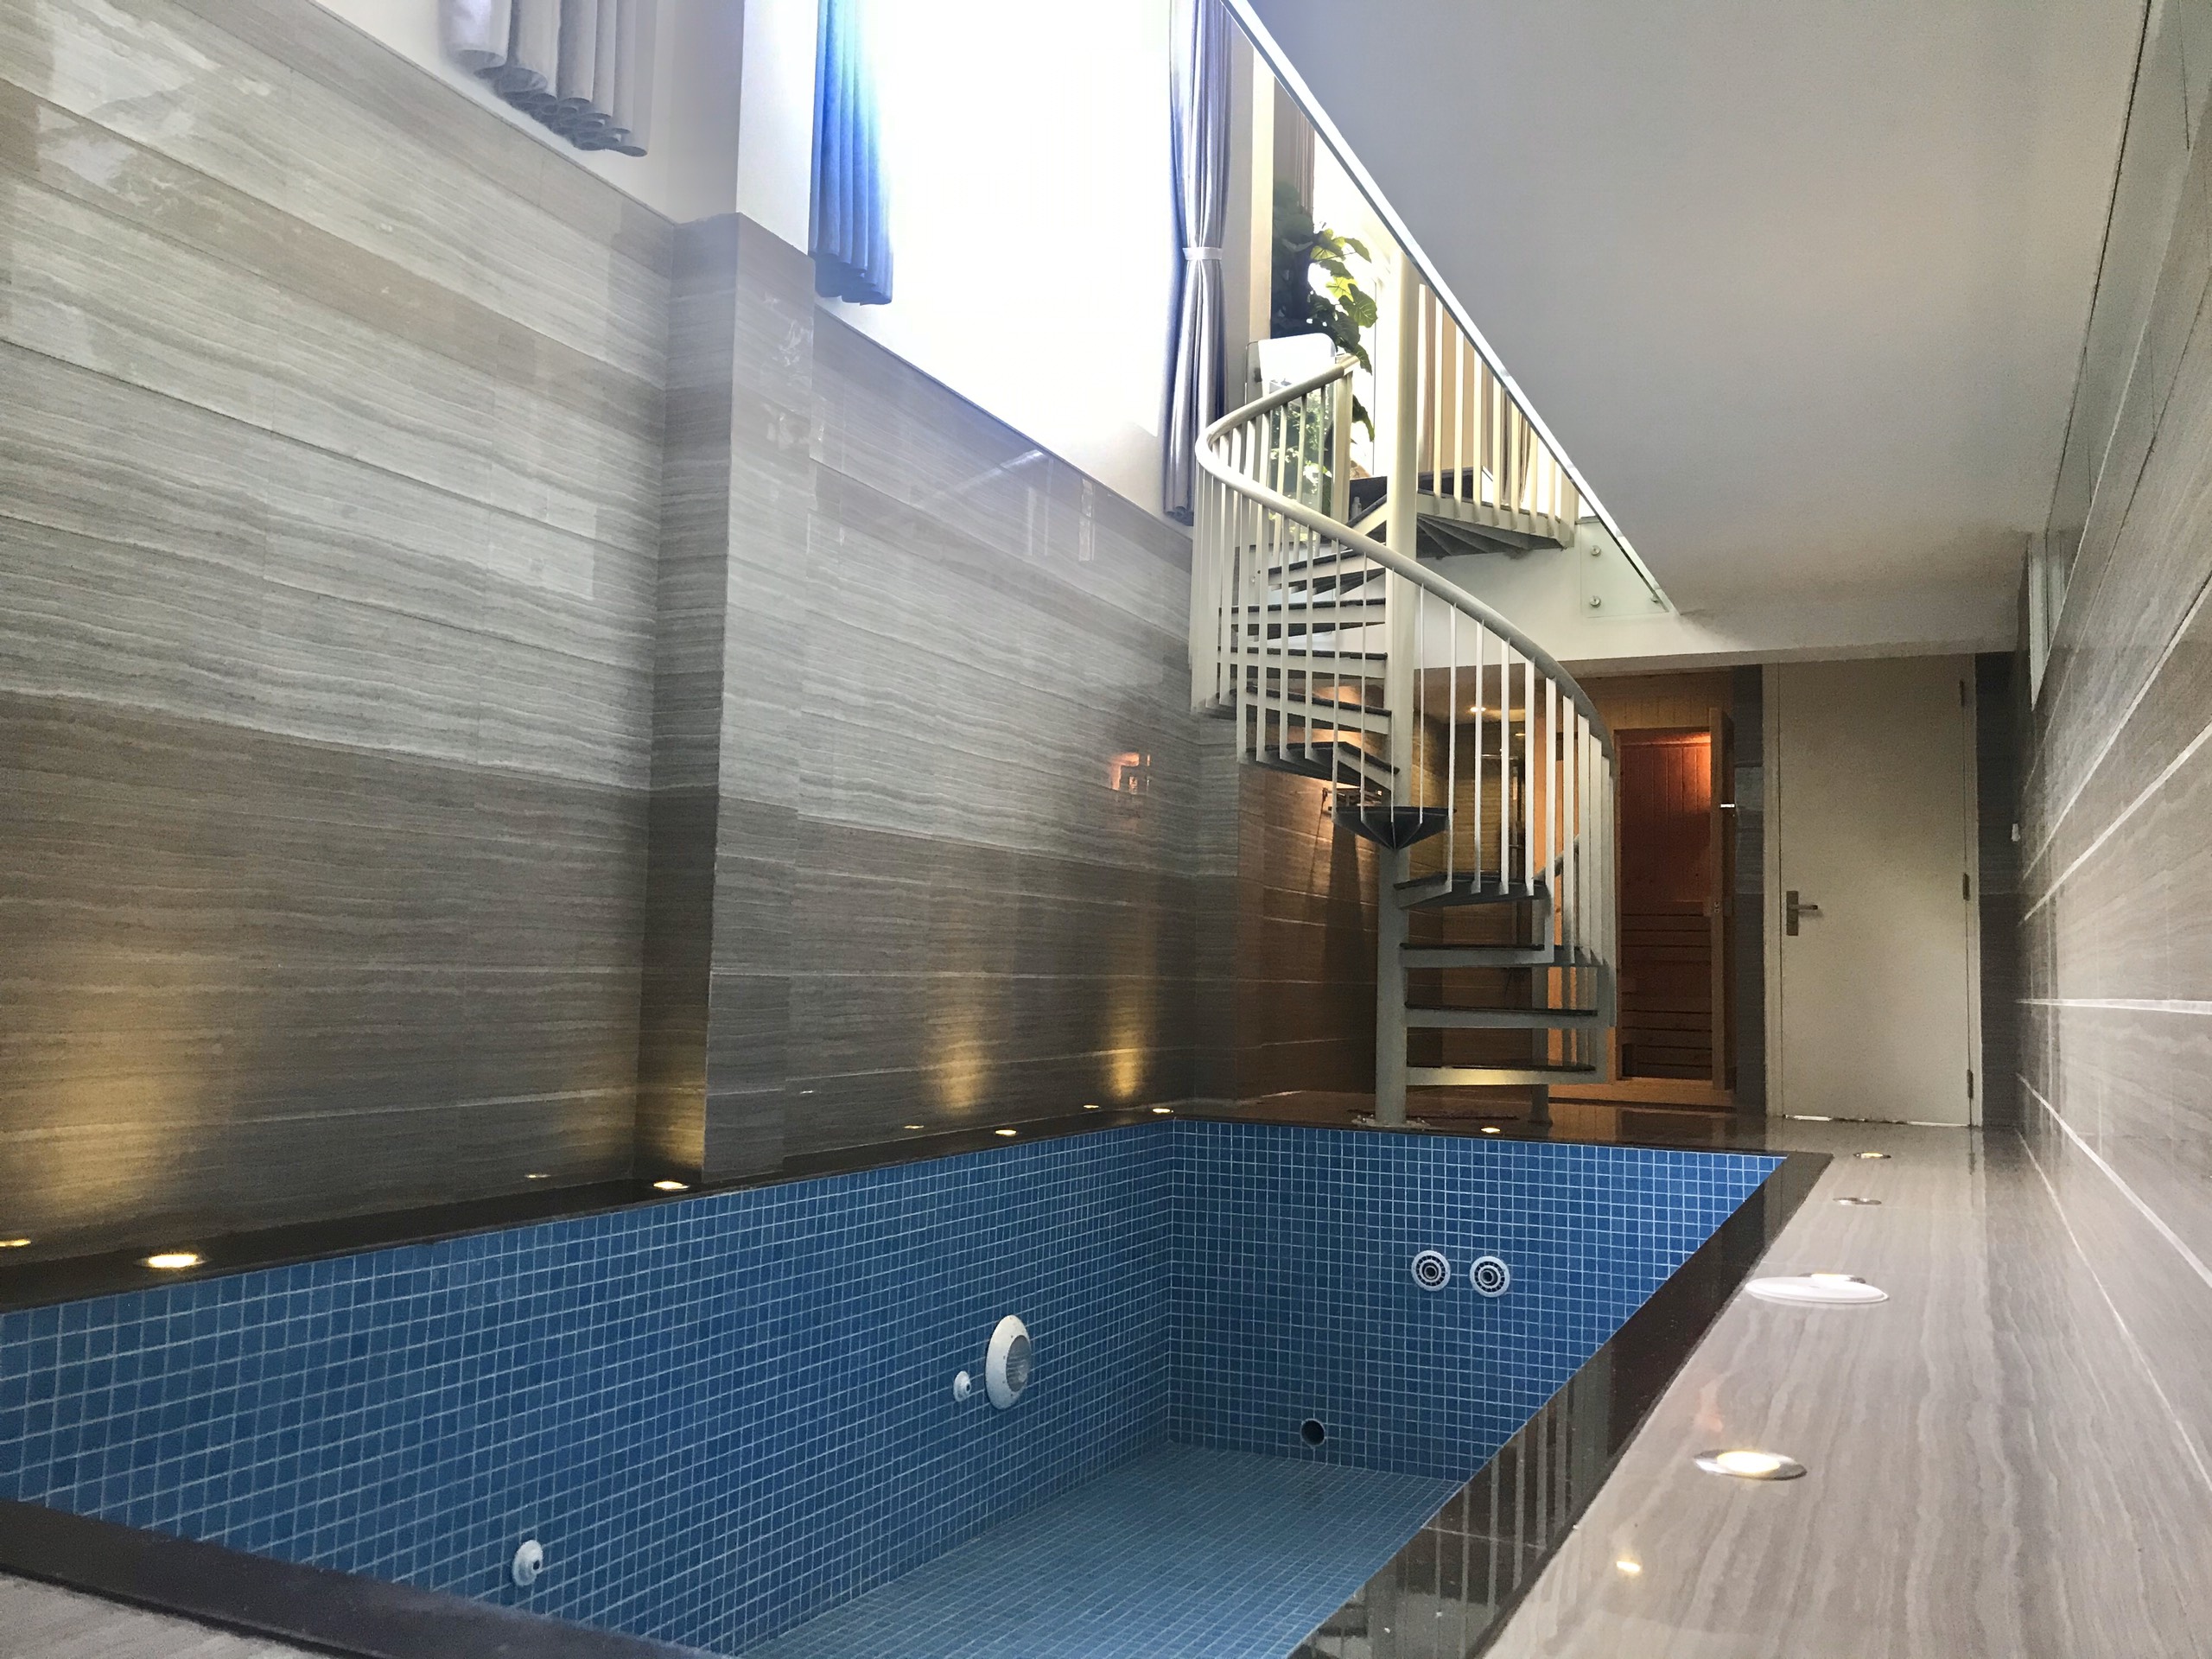 Vinhomes Riverside Duplex Villa With Swimming Pool, Sauna To Lease